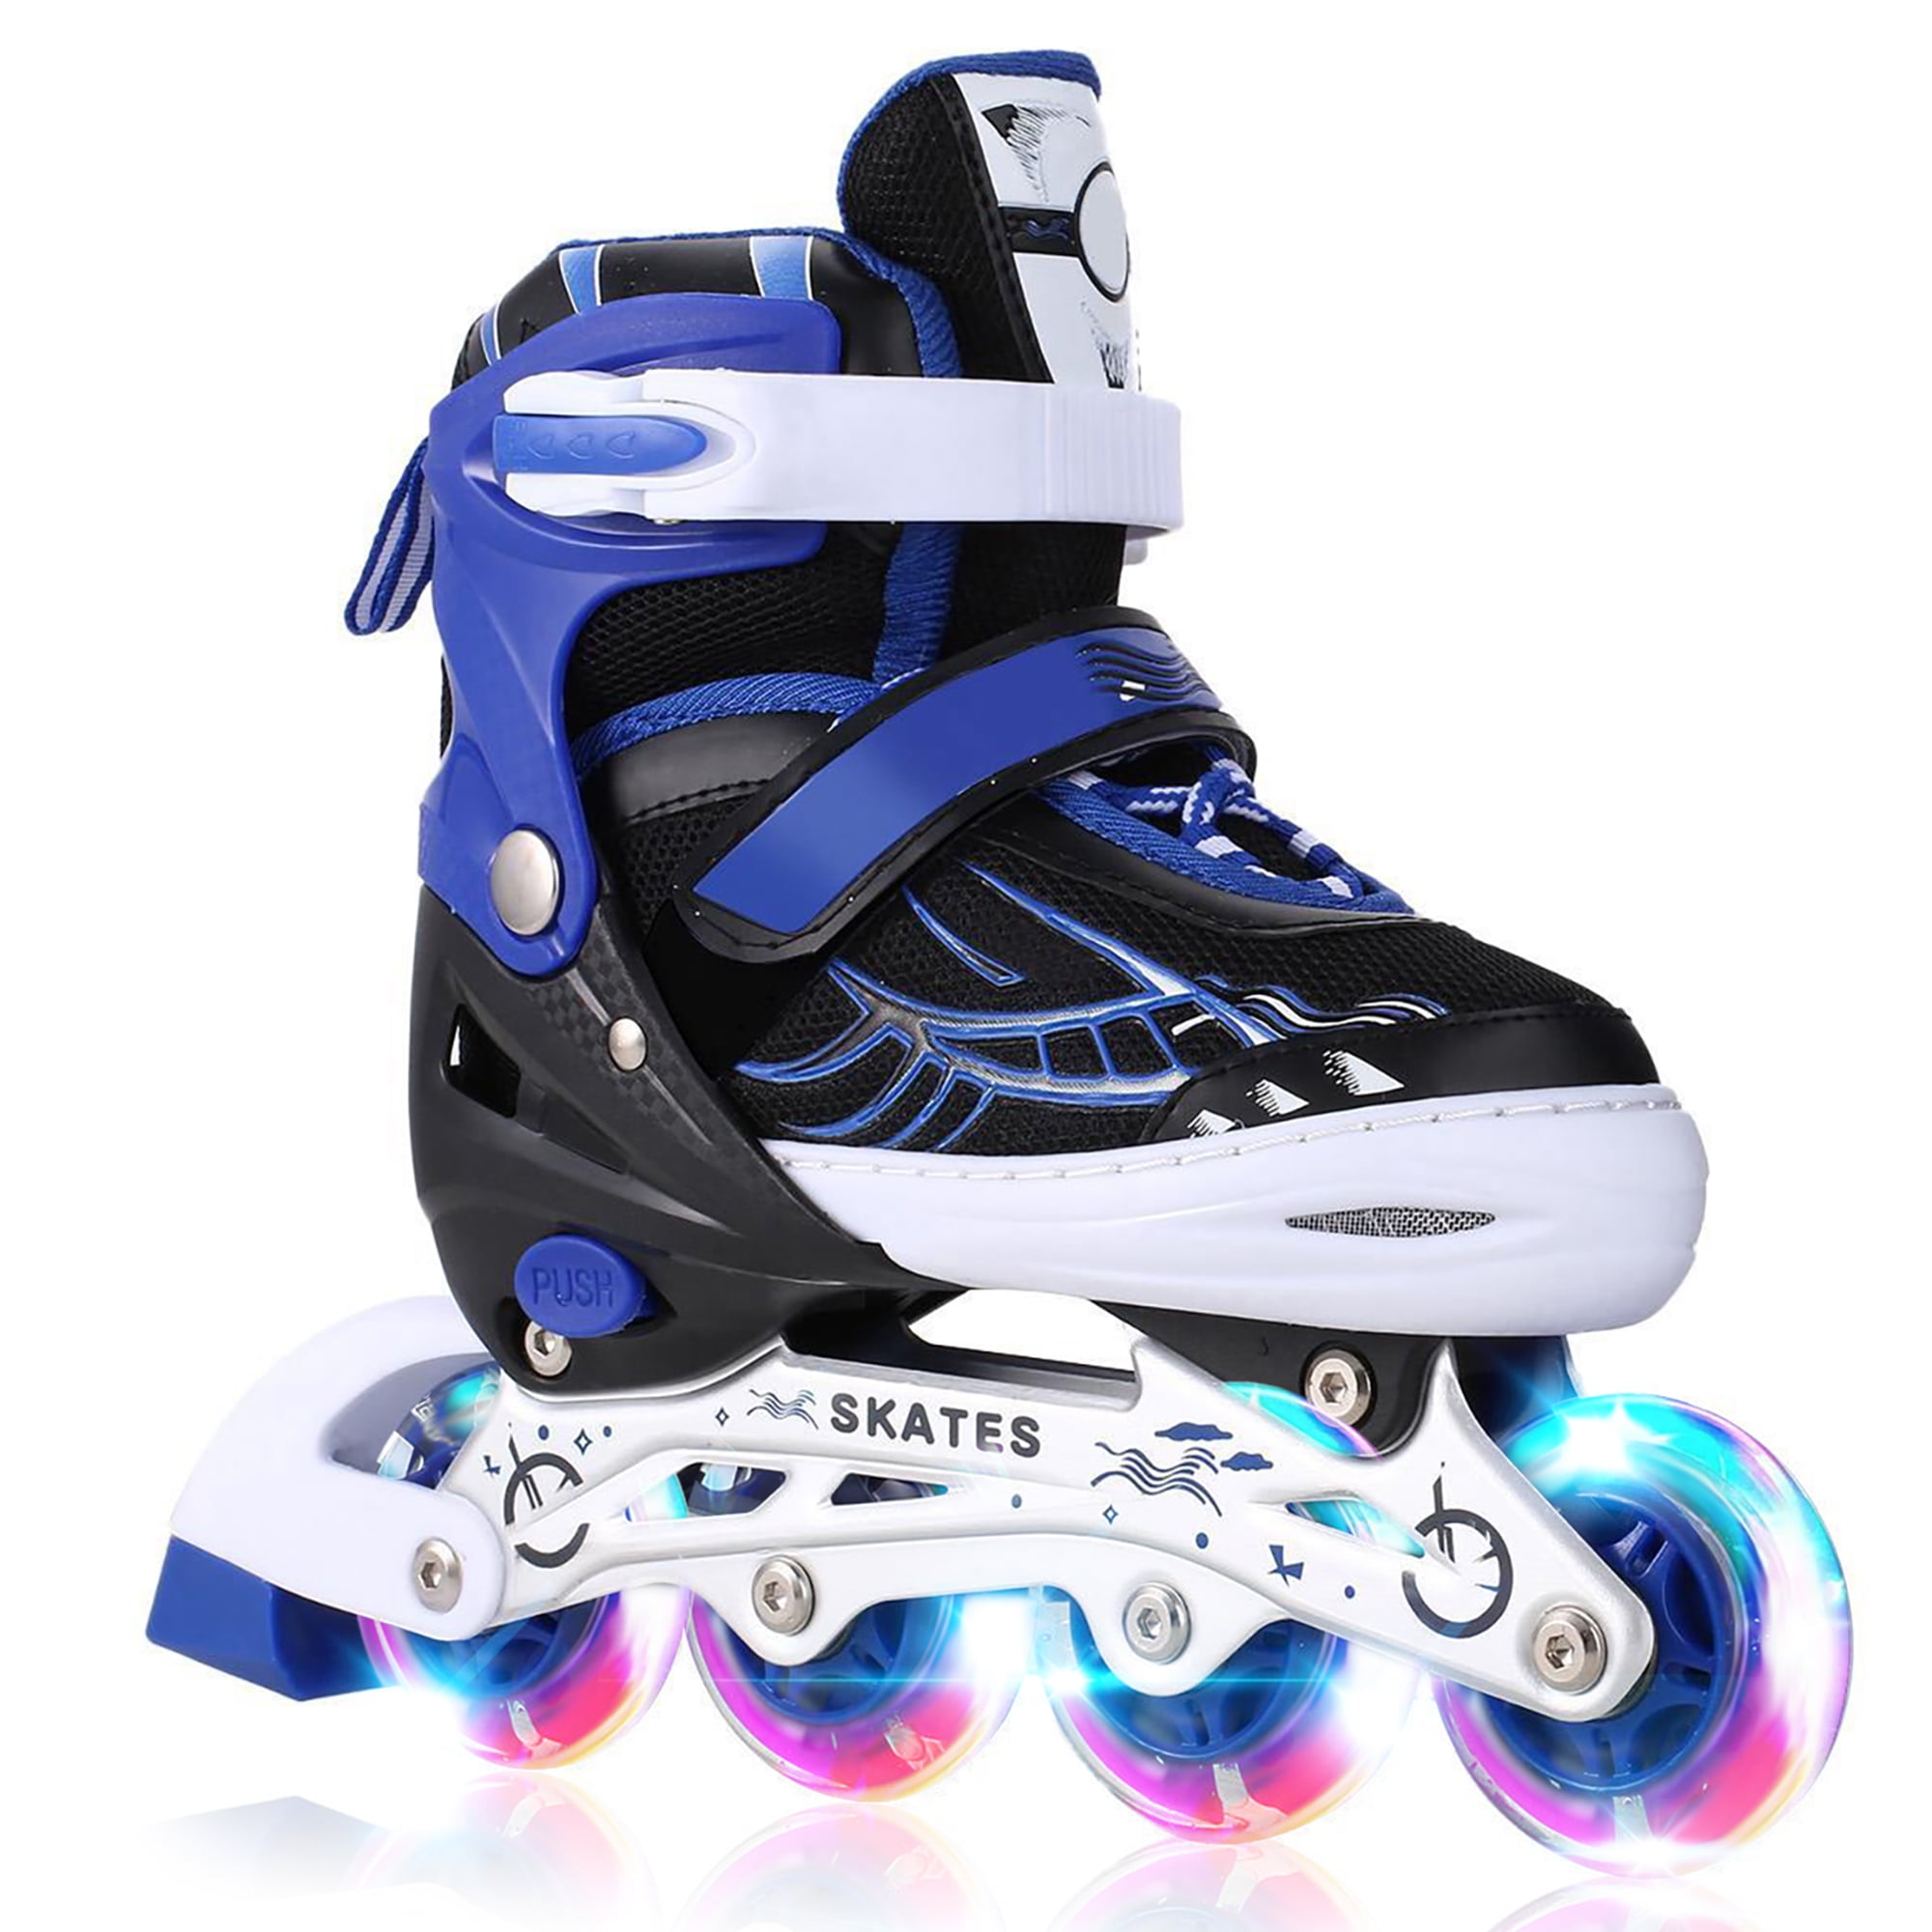 Kids Adjustable Inline Skates Roller Blades Light Up Scale w/Illuminating Wheels 